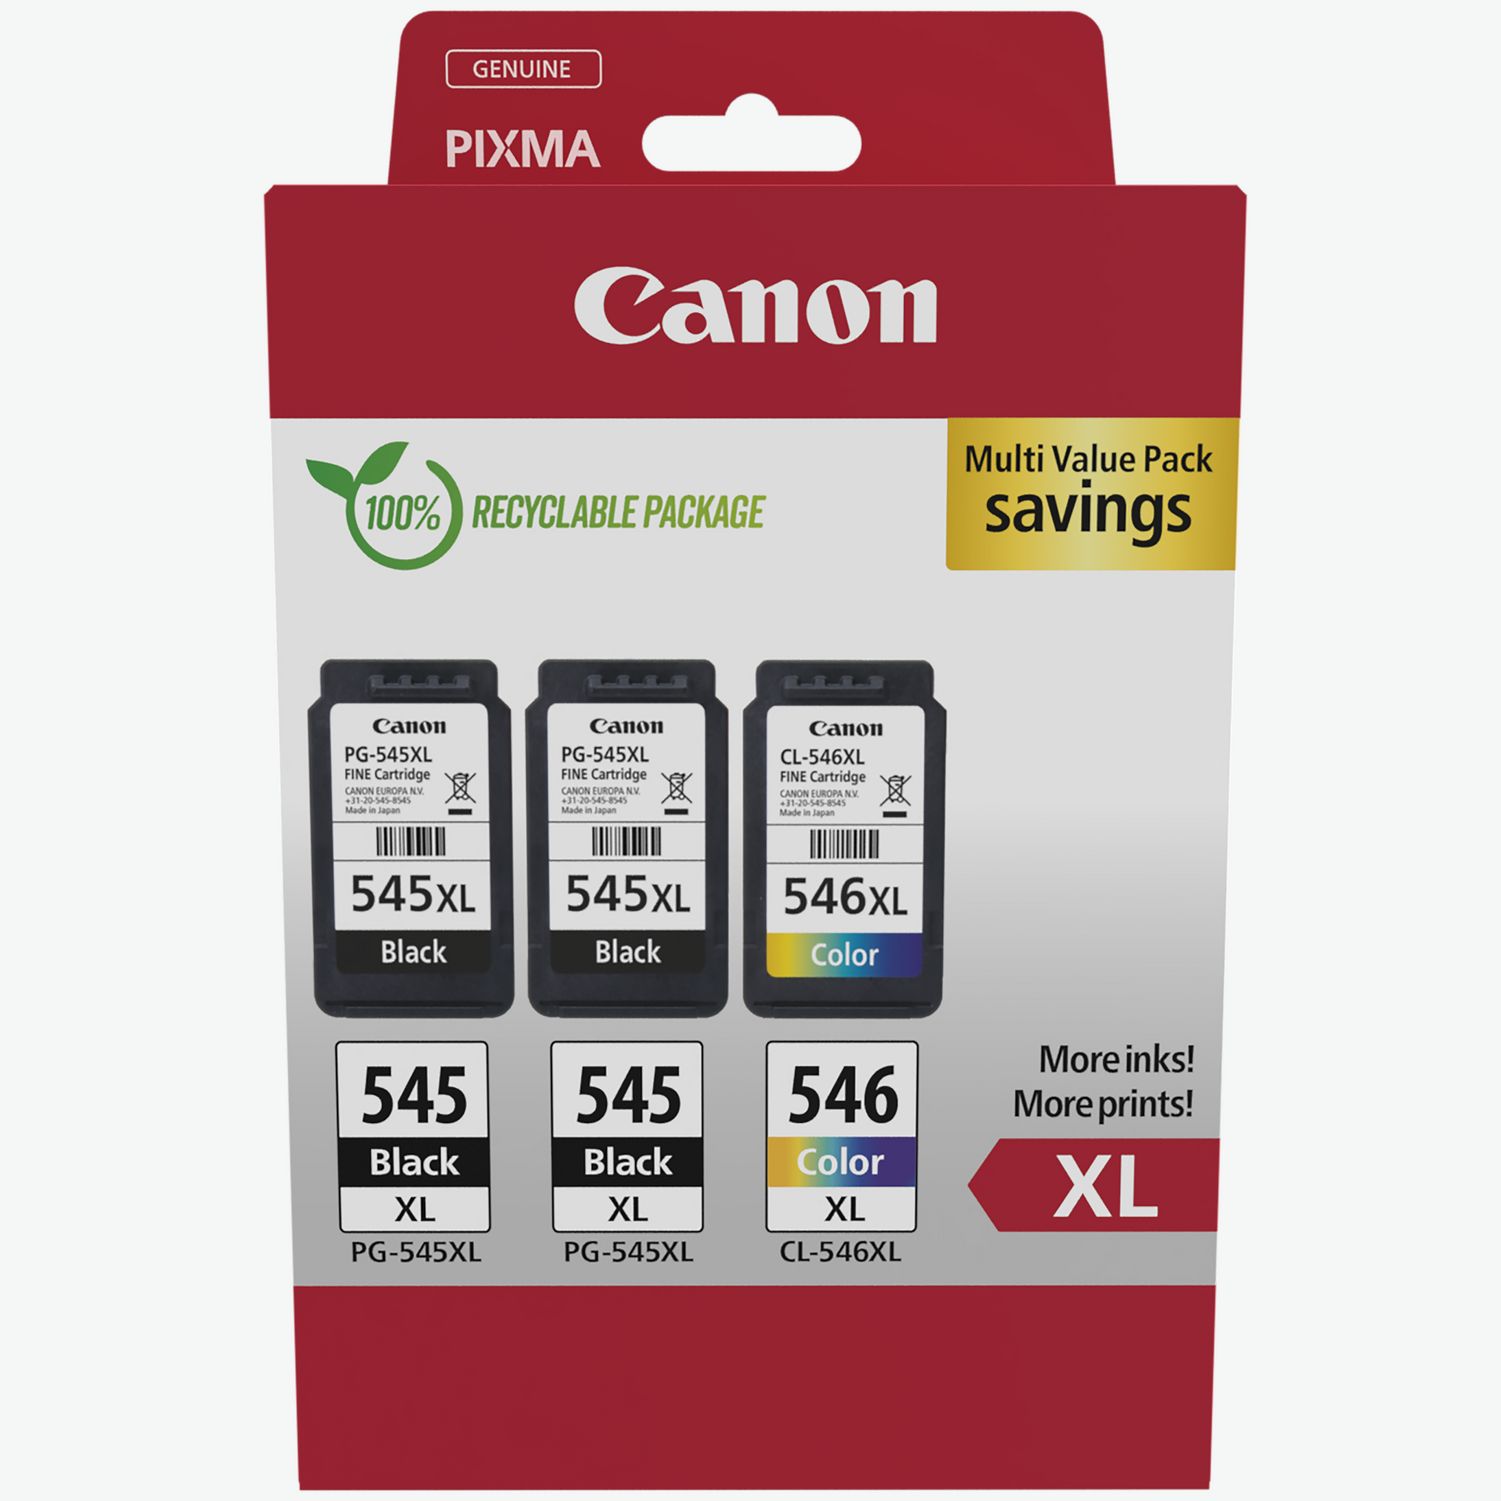 Canon PIXMA TS3350 Multifunction Wifi Printer - Black & ink cartridges  PG-545 XL + CLI-546 XL BK/C/M/Y (2 ink cartridges) multipack black + color  8ml + 9ml ORIGINAL for PIXMA printers 